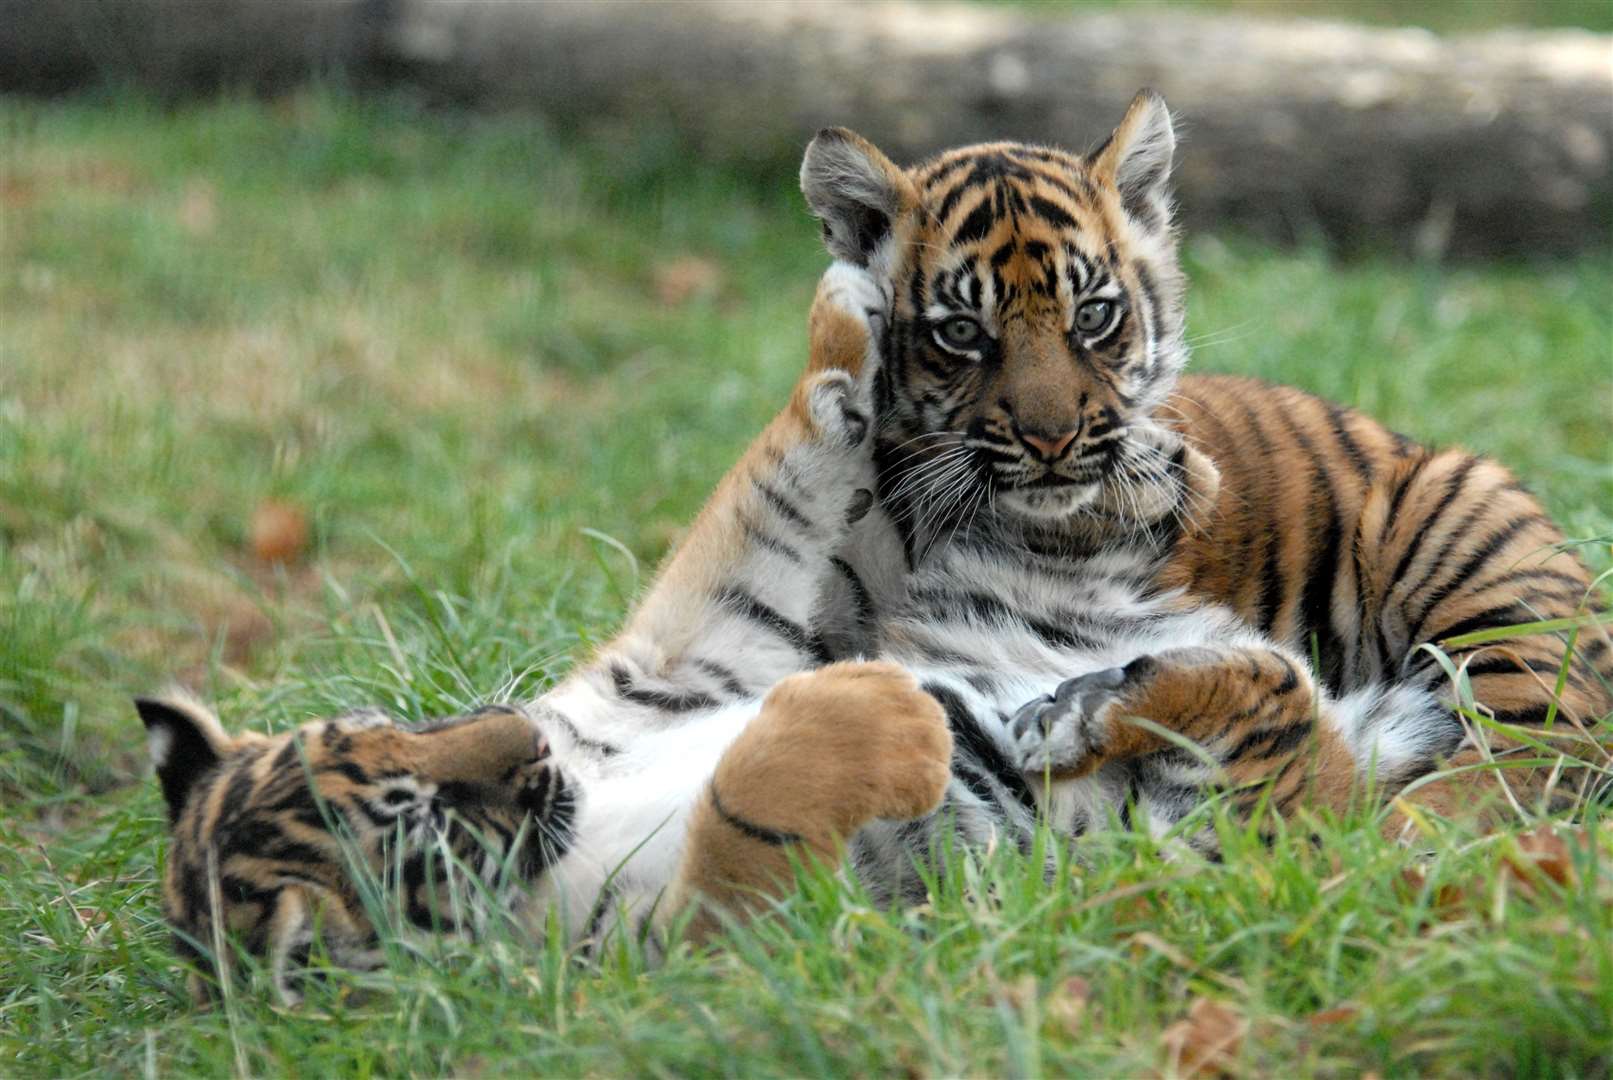 Sumatran tiger cubs Toba and Kubu were born in 2011 at The Big Cat Sanctuary. Picture: Simon Jones